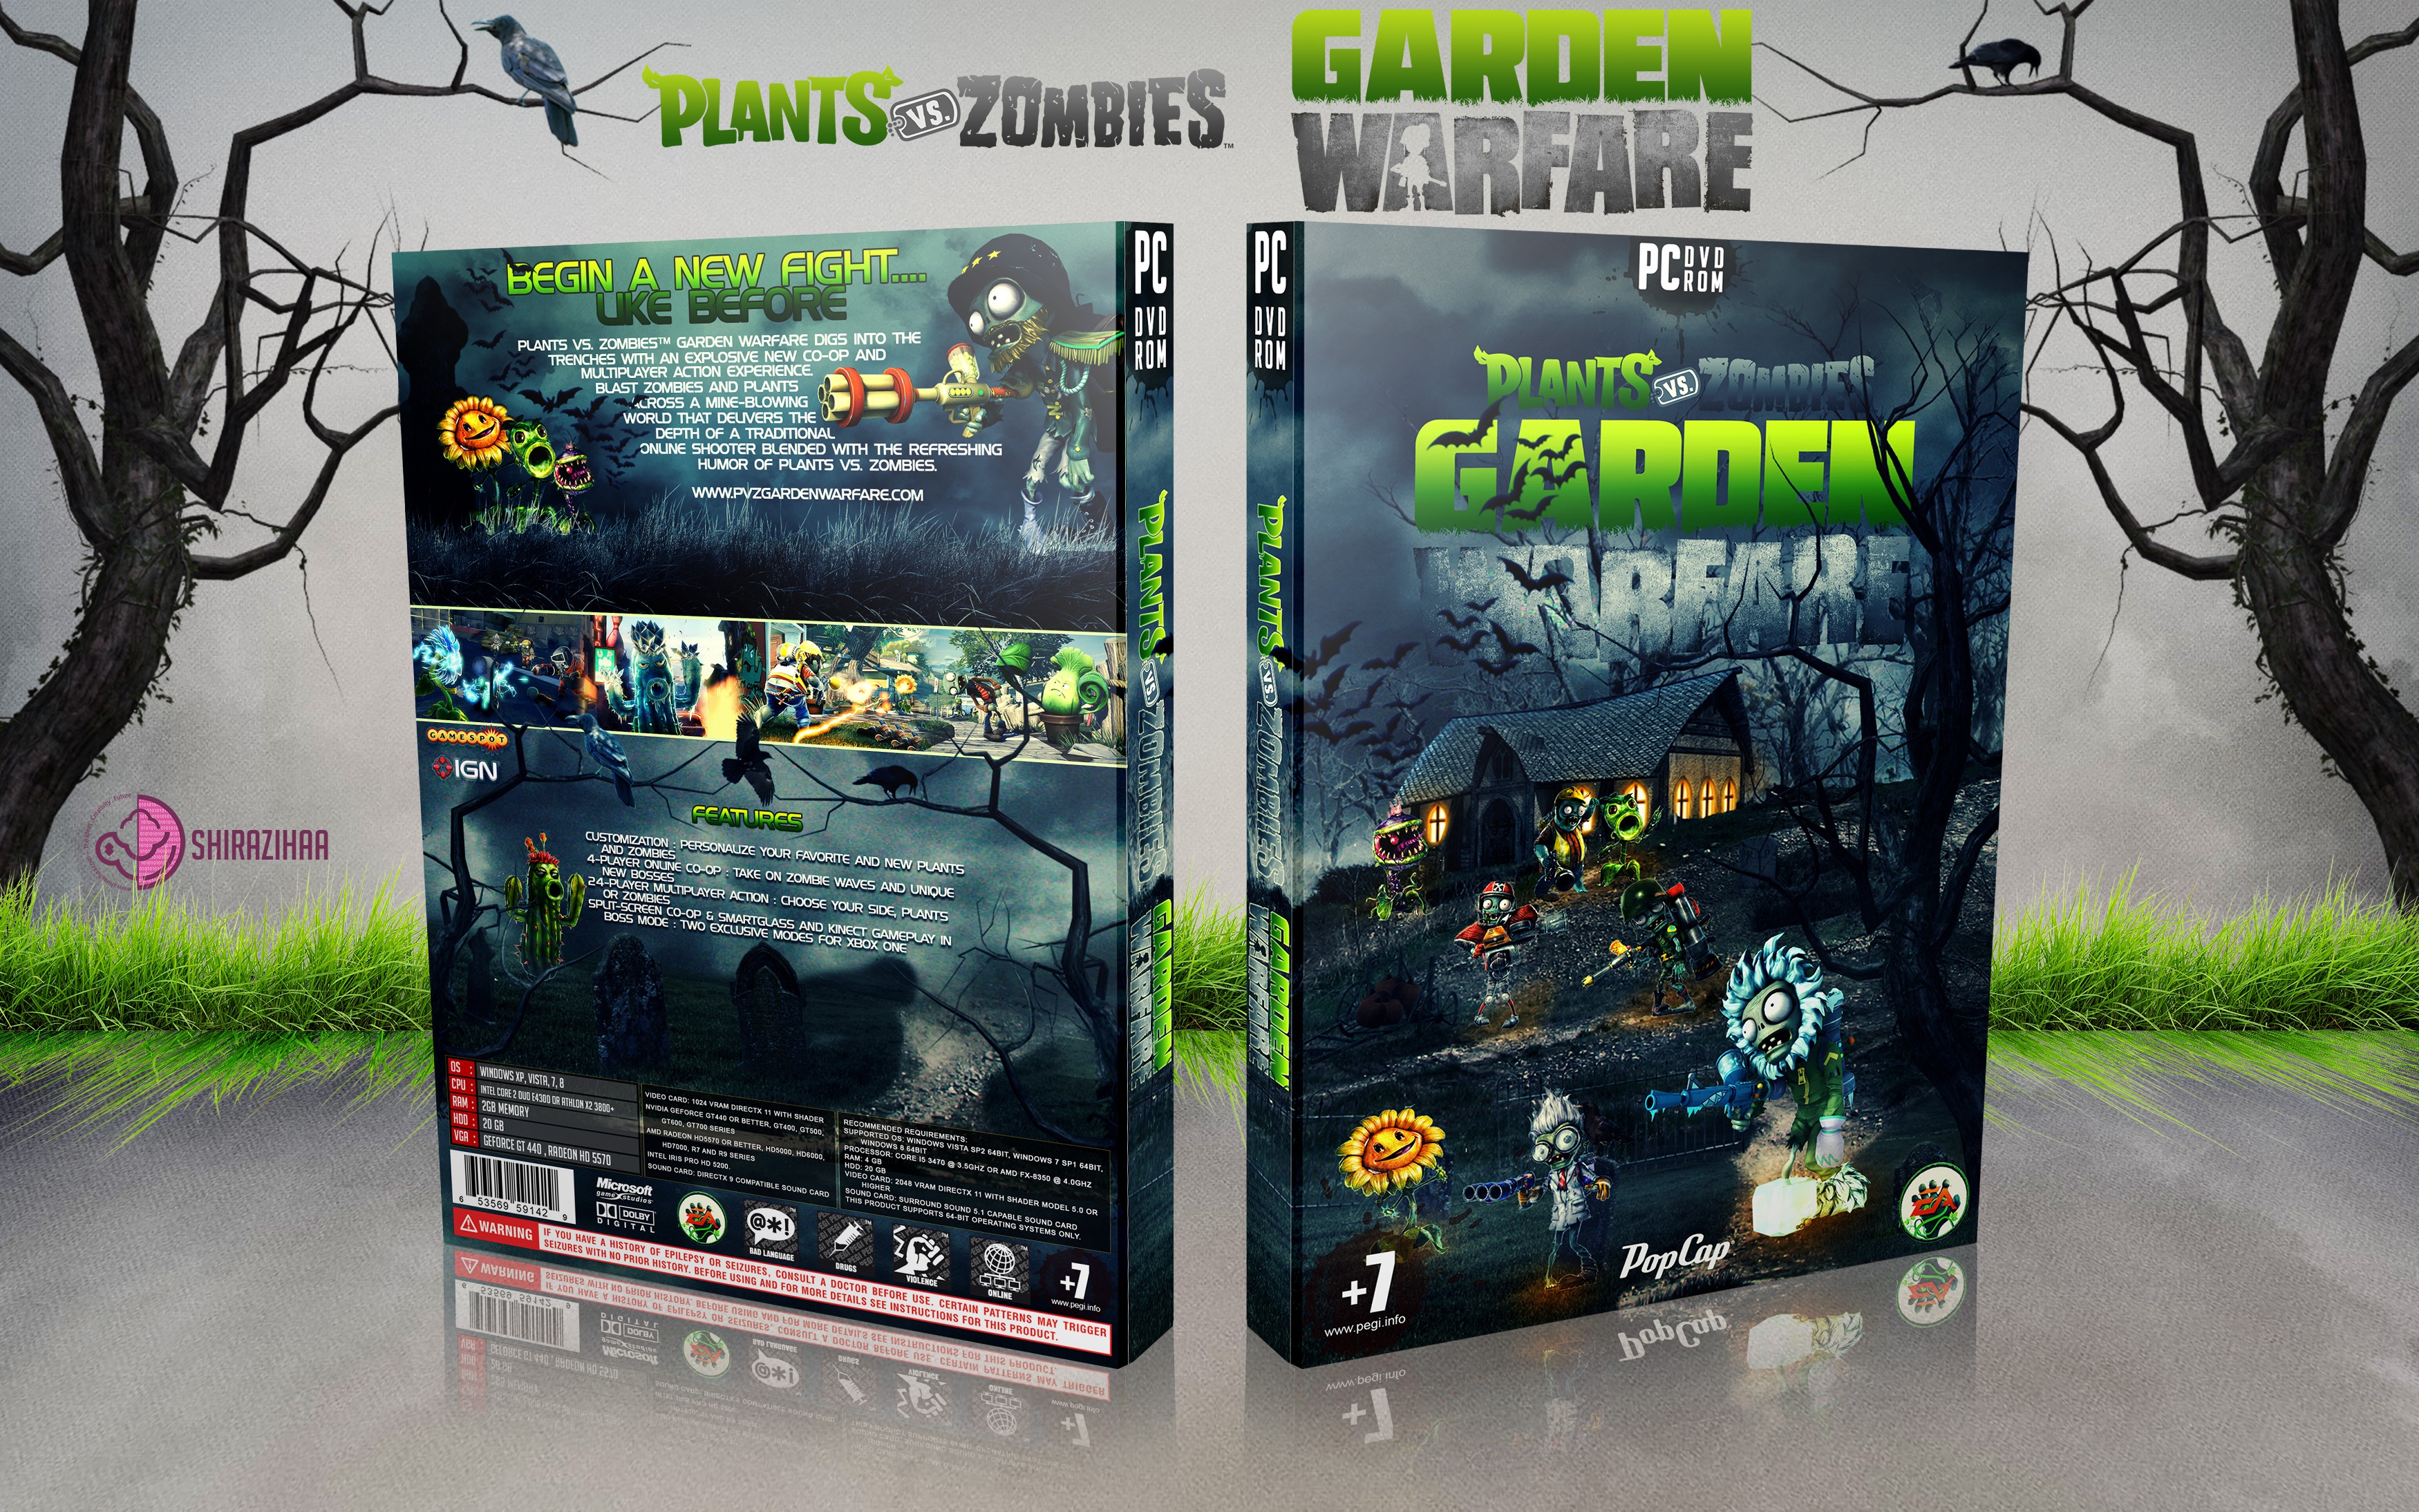 download plants vs zombies garden warfare full version free for pc